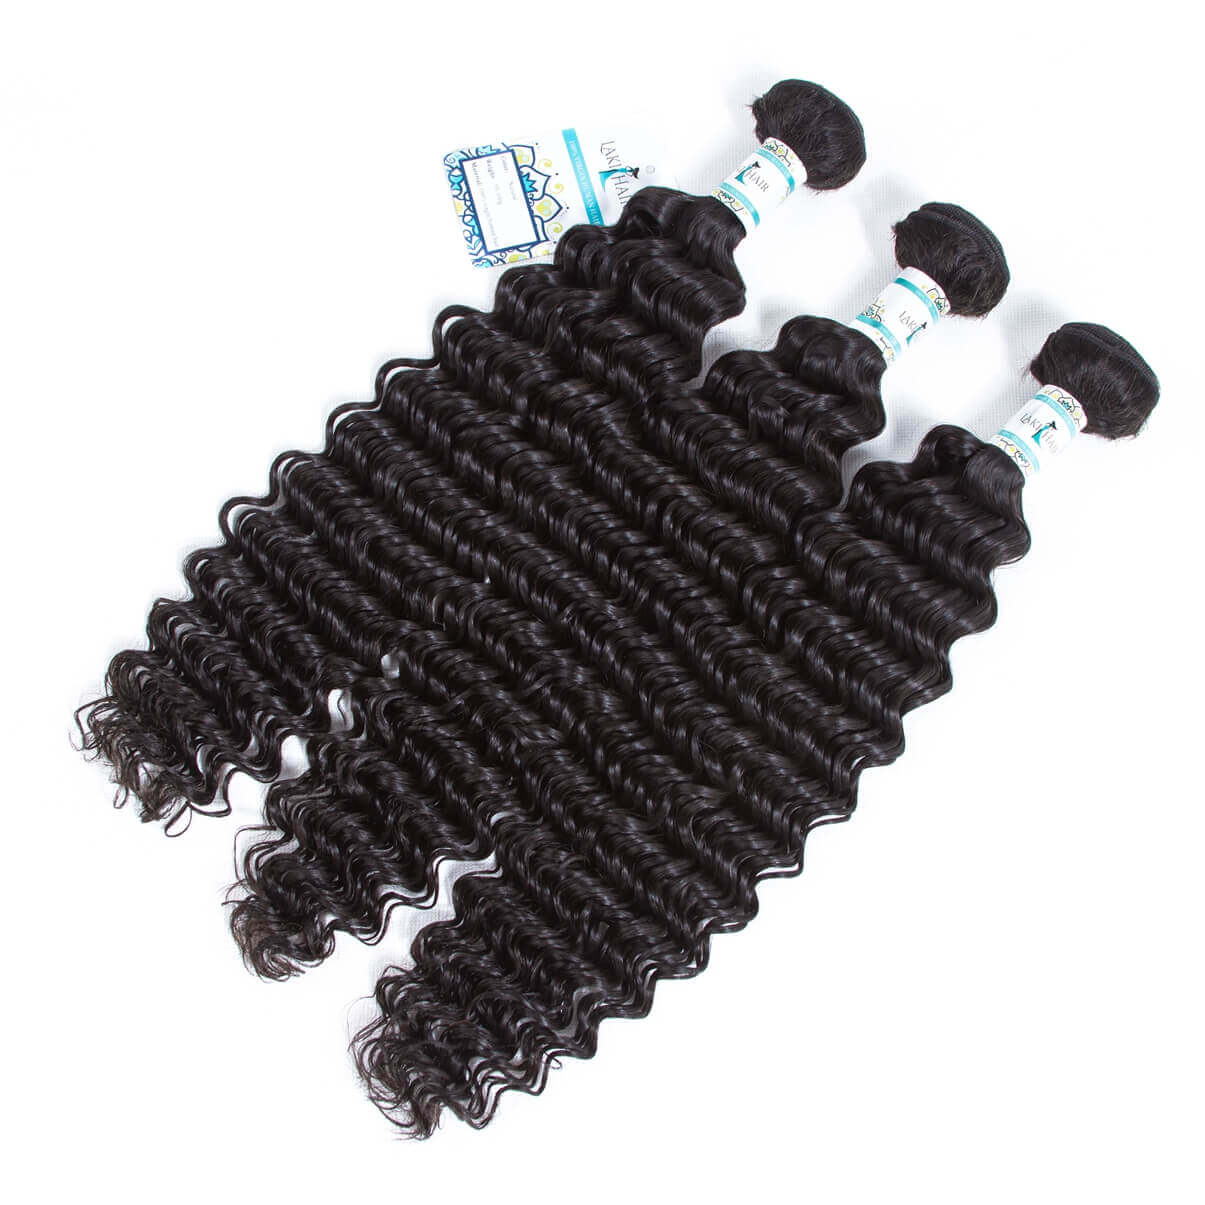 Lakihair 8A Human Hair Weaving Deep Wave 1 Bundle Deals Virgin Human Hair Extensions